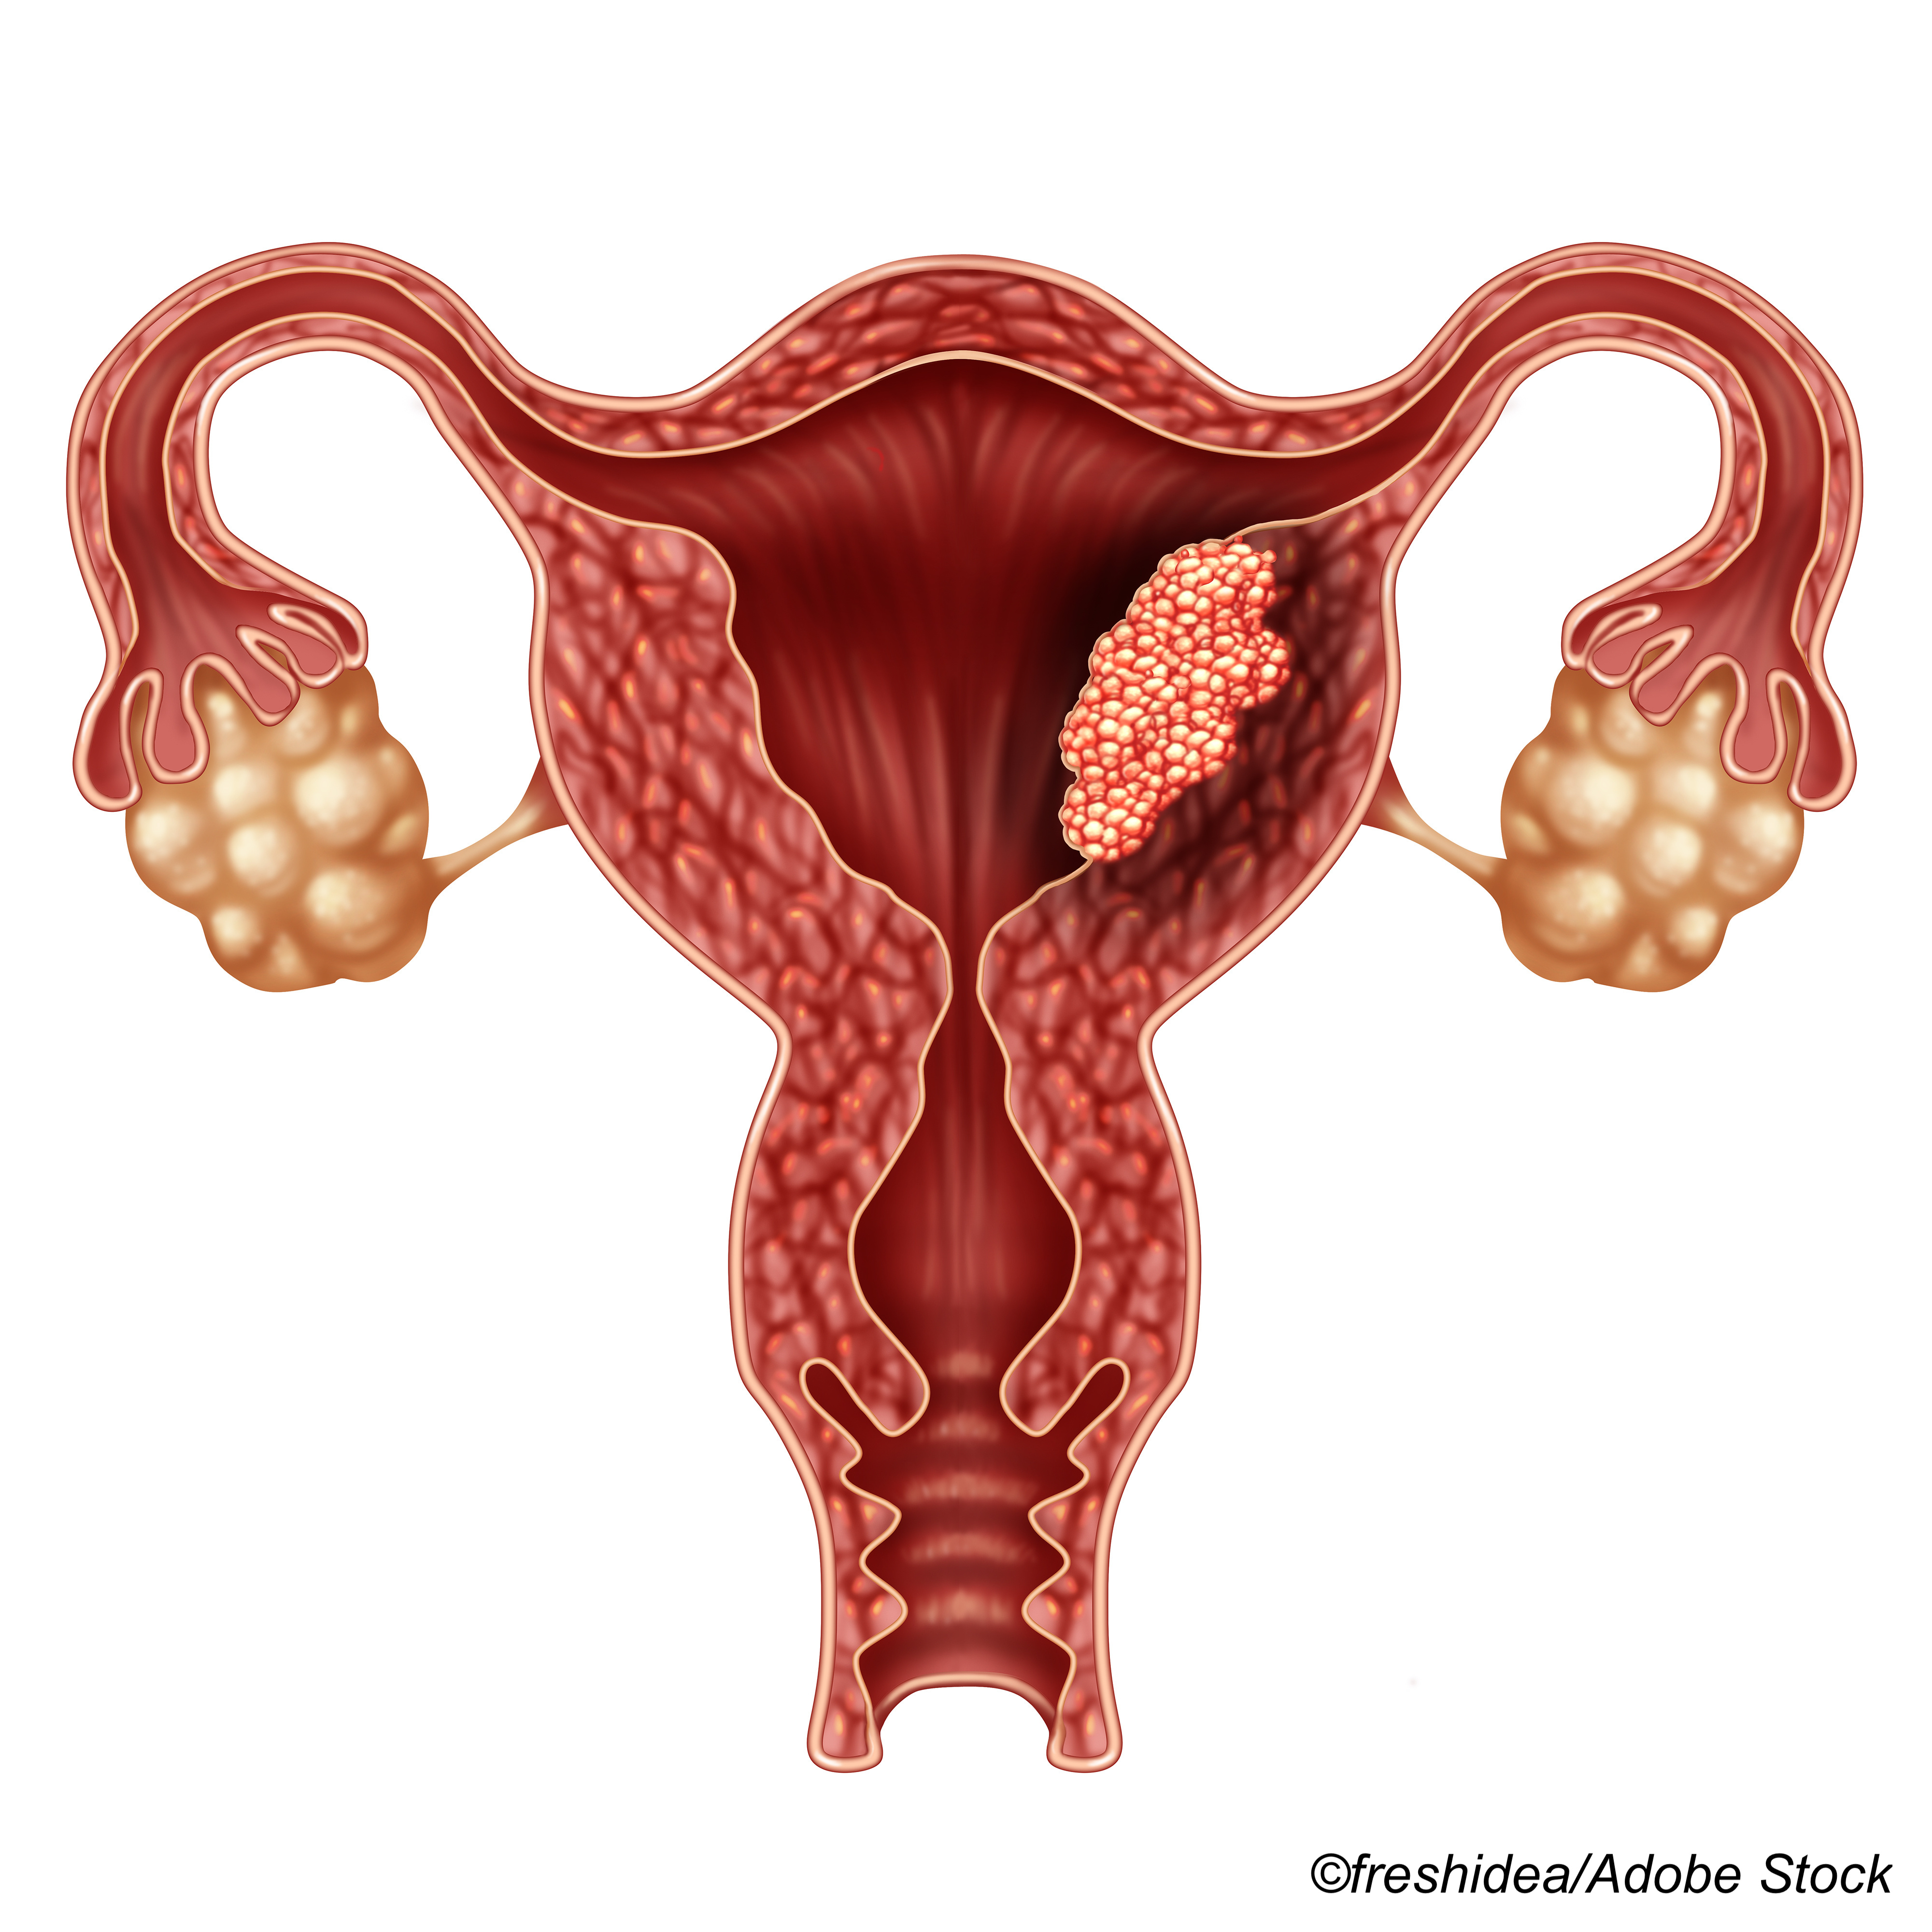 Two-Agent Regimen Proves Mettle in Advanced Endometrial Cancer
